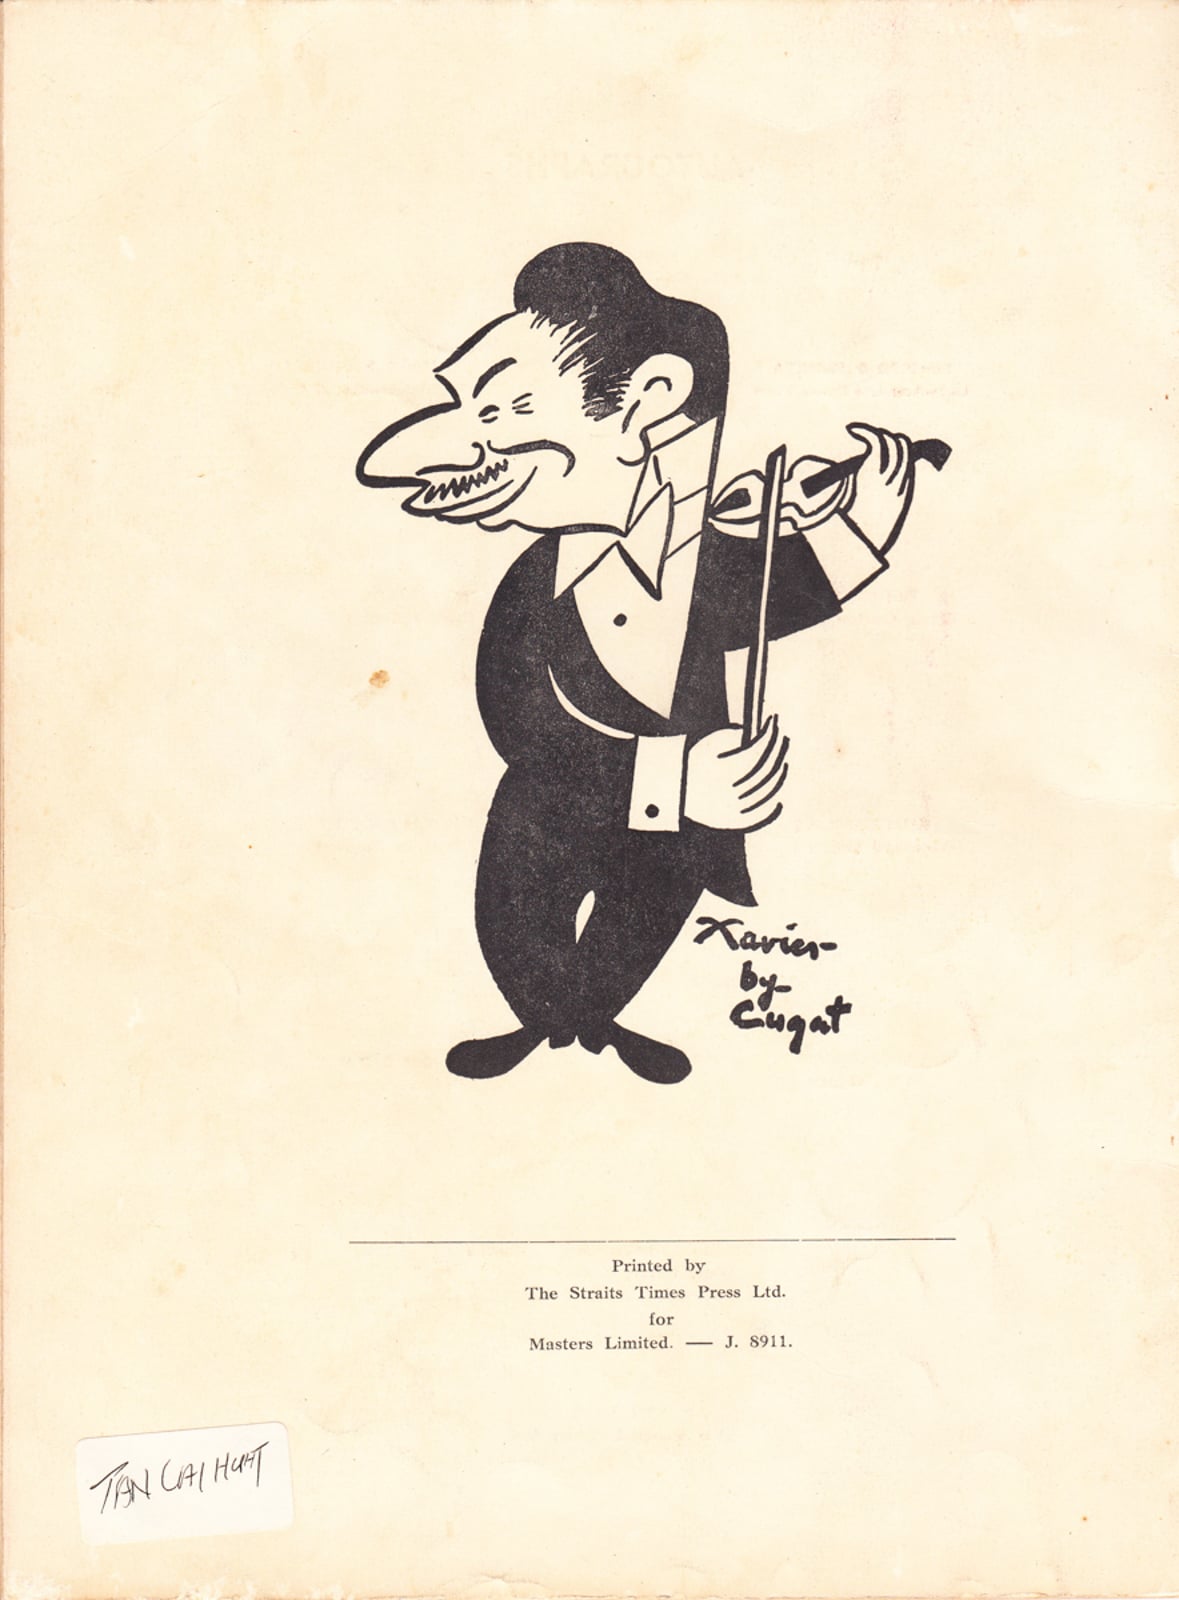 Xavier Cugat Show Souvenir Programme, 1953